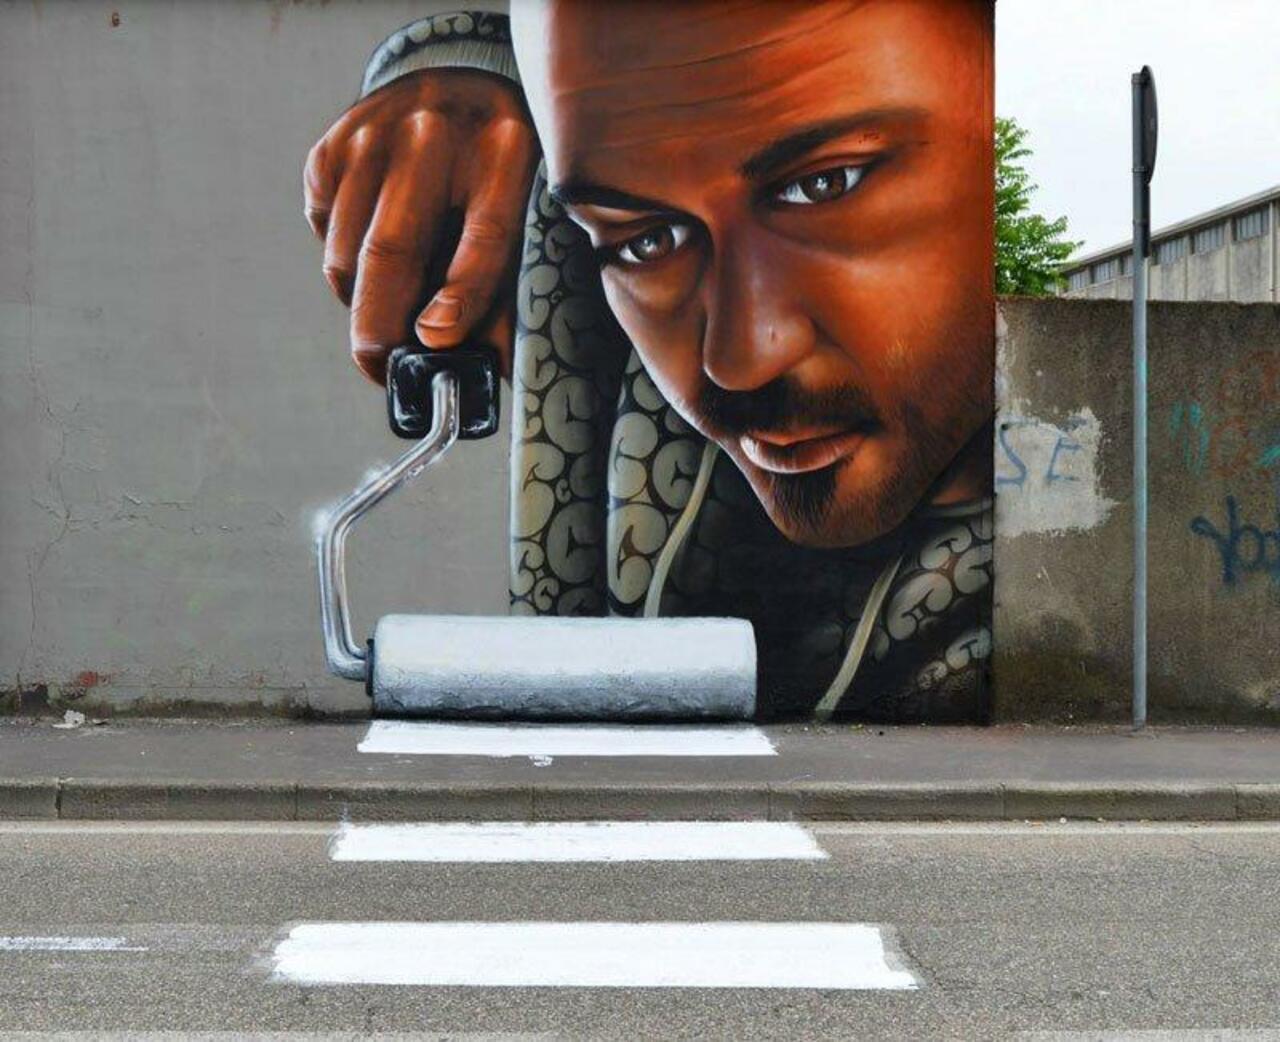 Rolling through the streets. #art #artist #aerosol #urban #mural #graffiti #streetphotography #artoftheday #handmade http://t.co/Y3DcdYtCtz